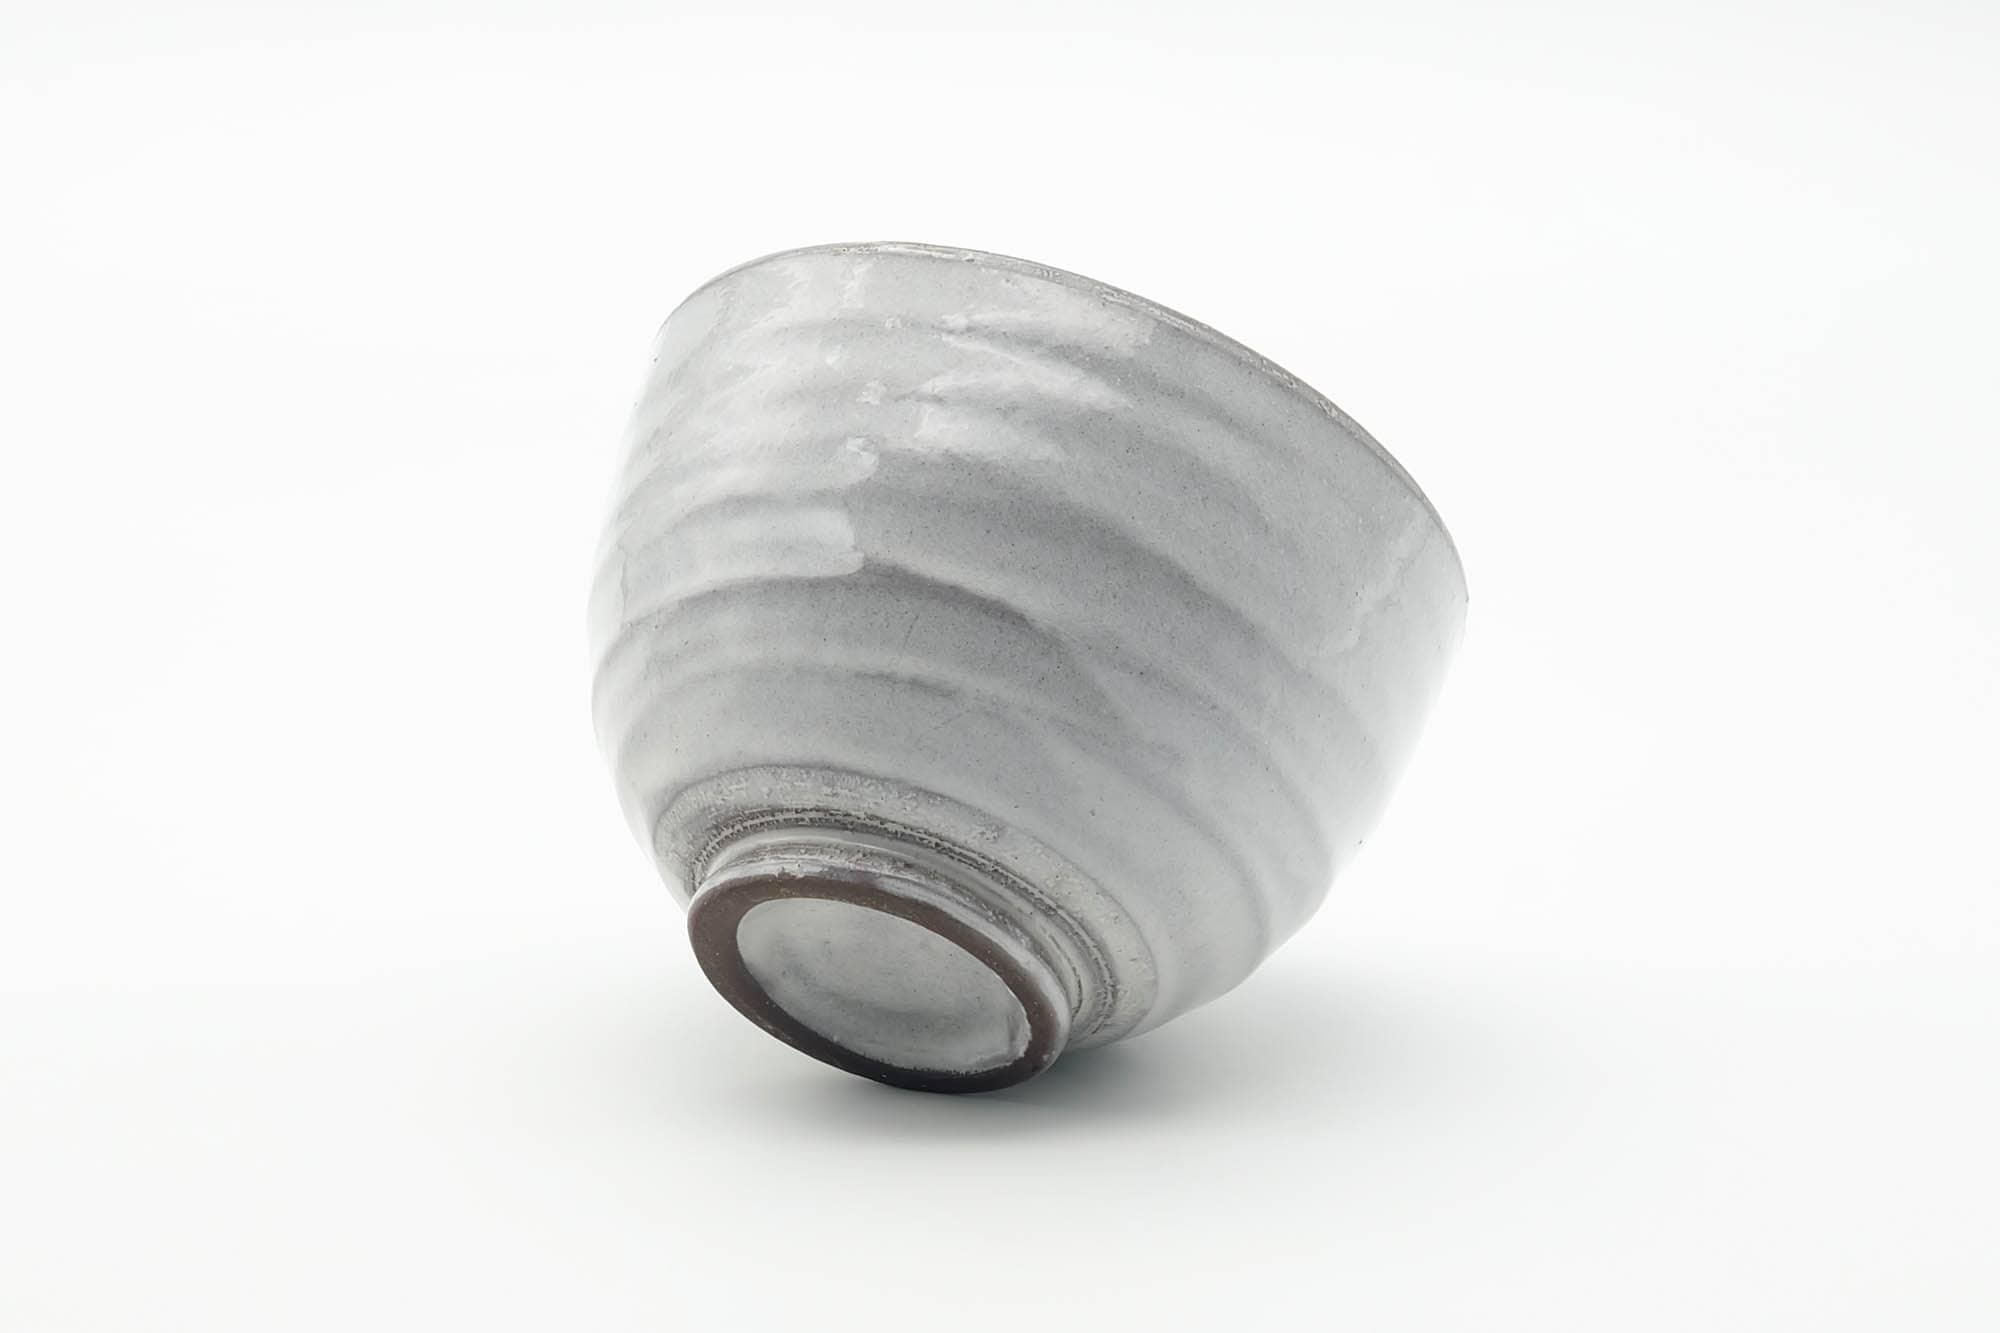 Japanese Matcha Bowl - Milky White Drip-Glazed Chawan - 450ml